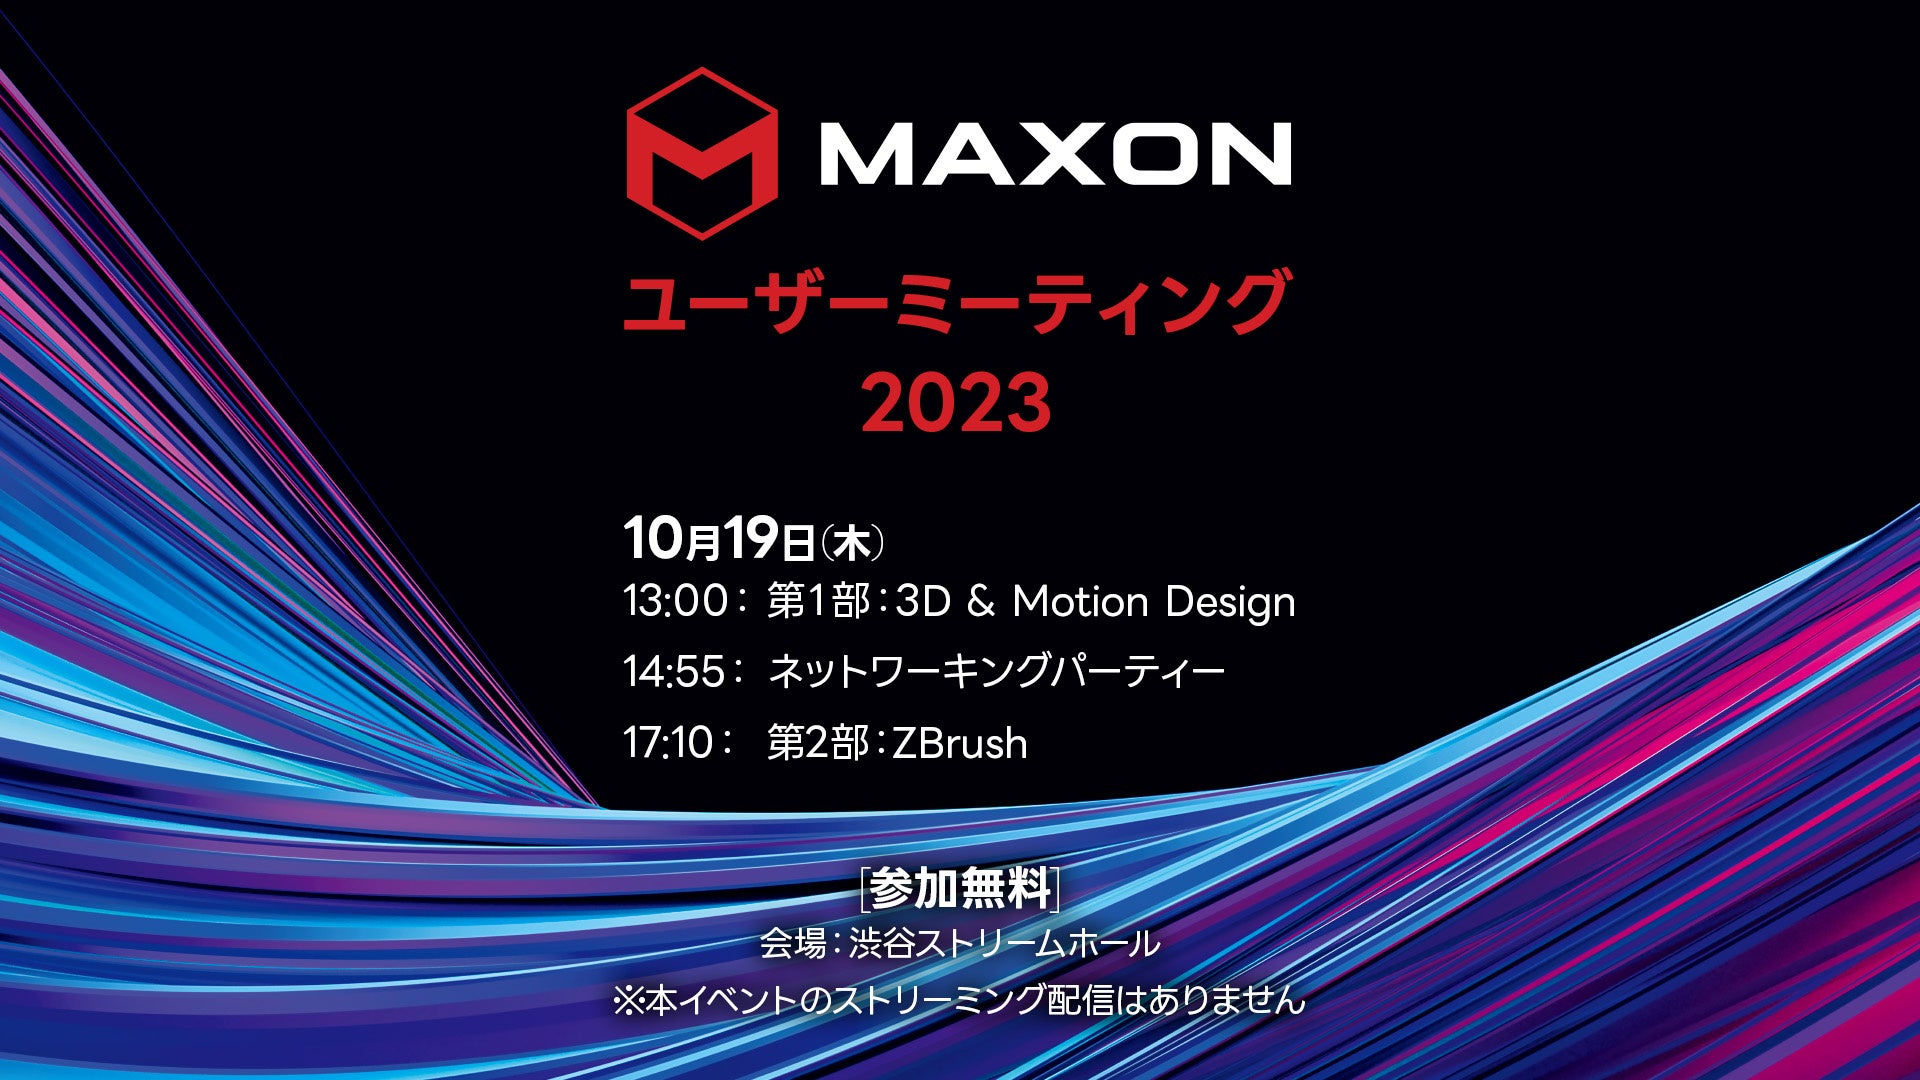 Maxon Oneの魅力とアーティストに出会うセミナーとパーティイベント「Maxonユーザーミーティング2023」を10月19日に開催